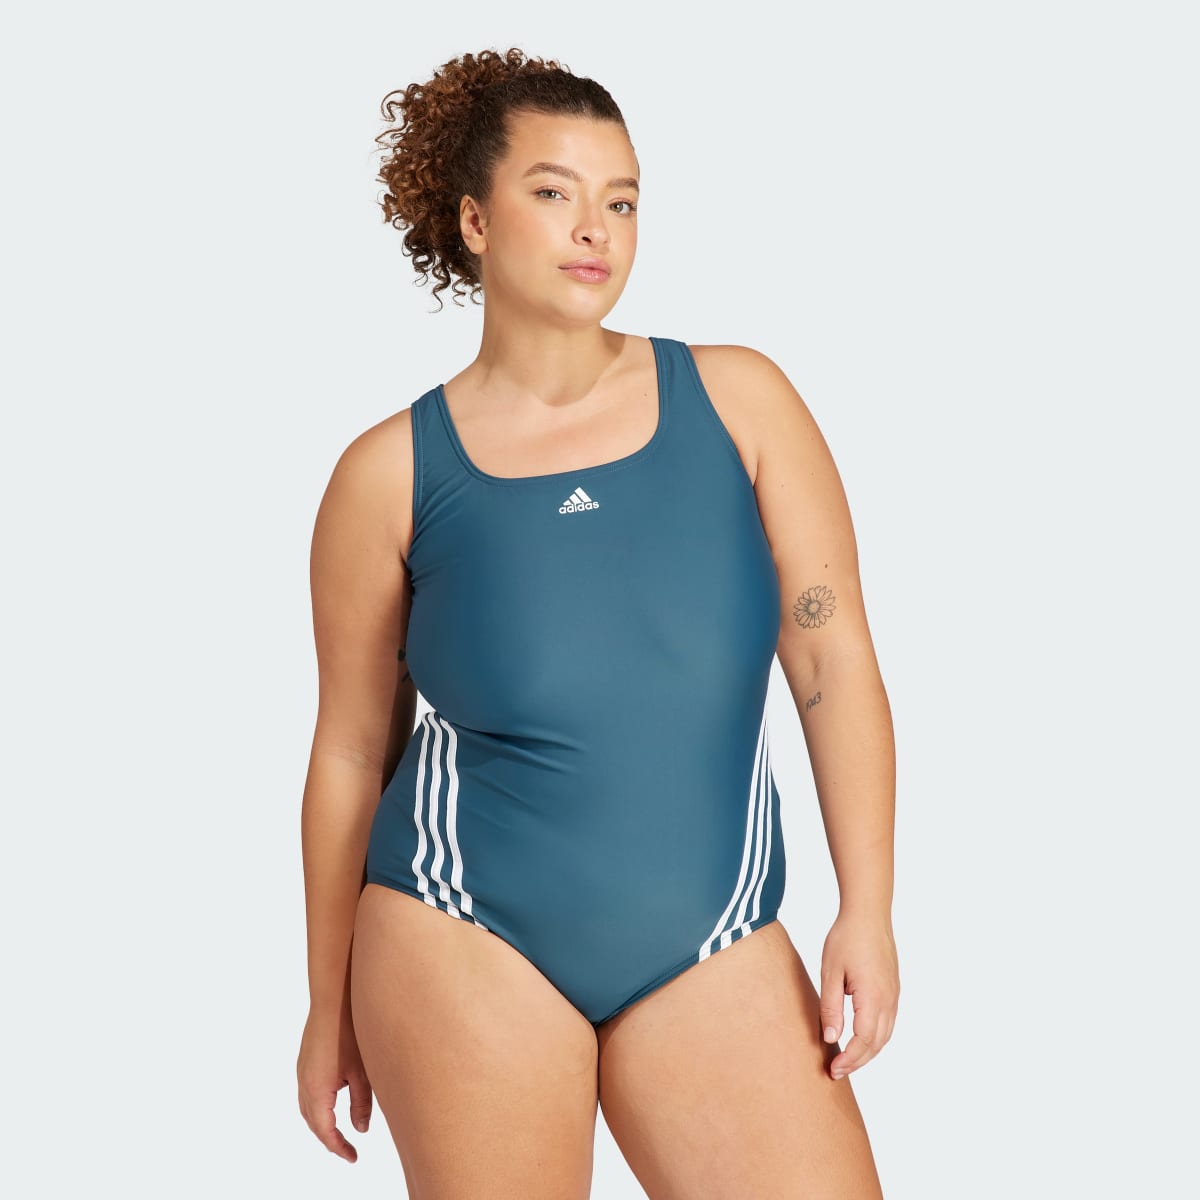 Adidas 3-Stripes Swim Suit (Plus Size). 4